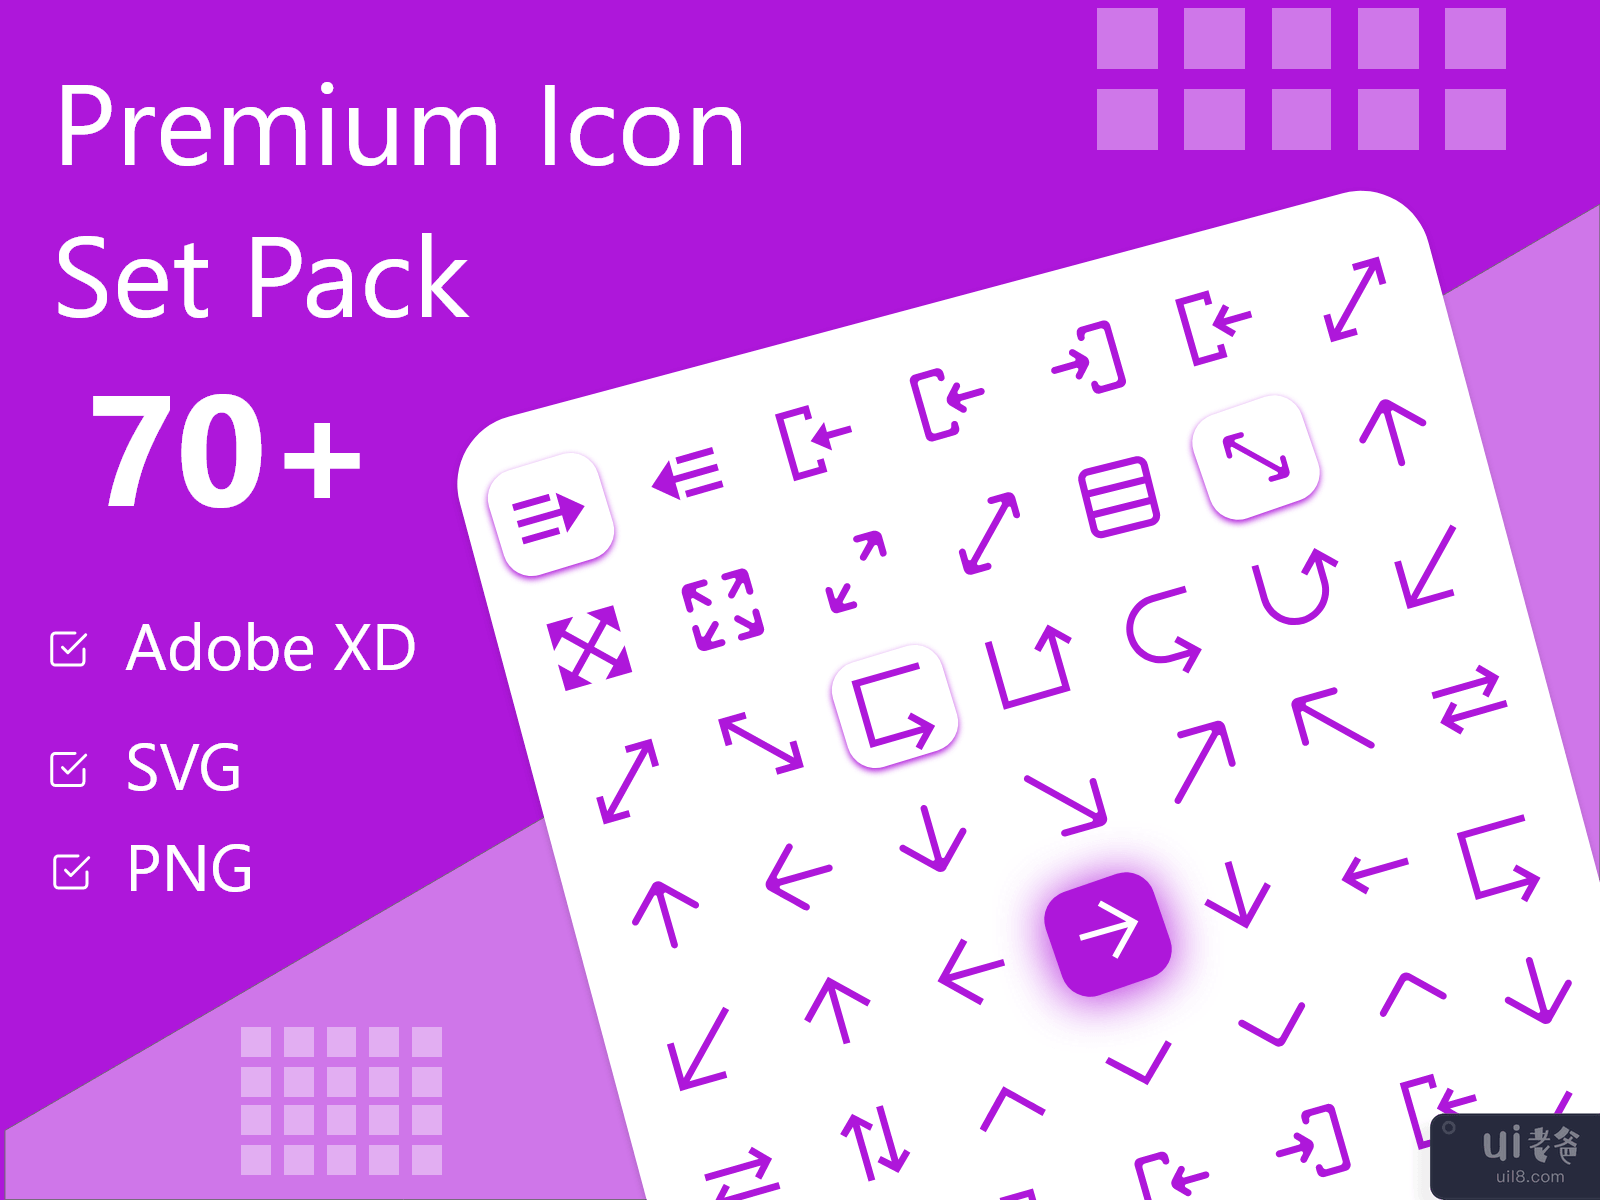 高级图标集包 v3-品牌标志图标集(Premium Icon Set Pack v3- Brand Logo Icon Set)插图